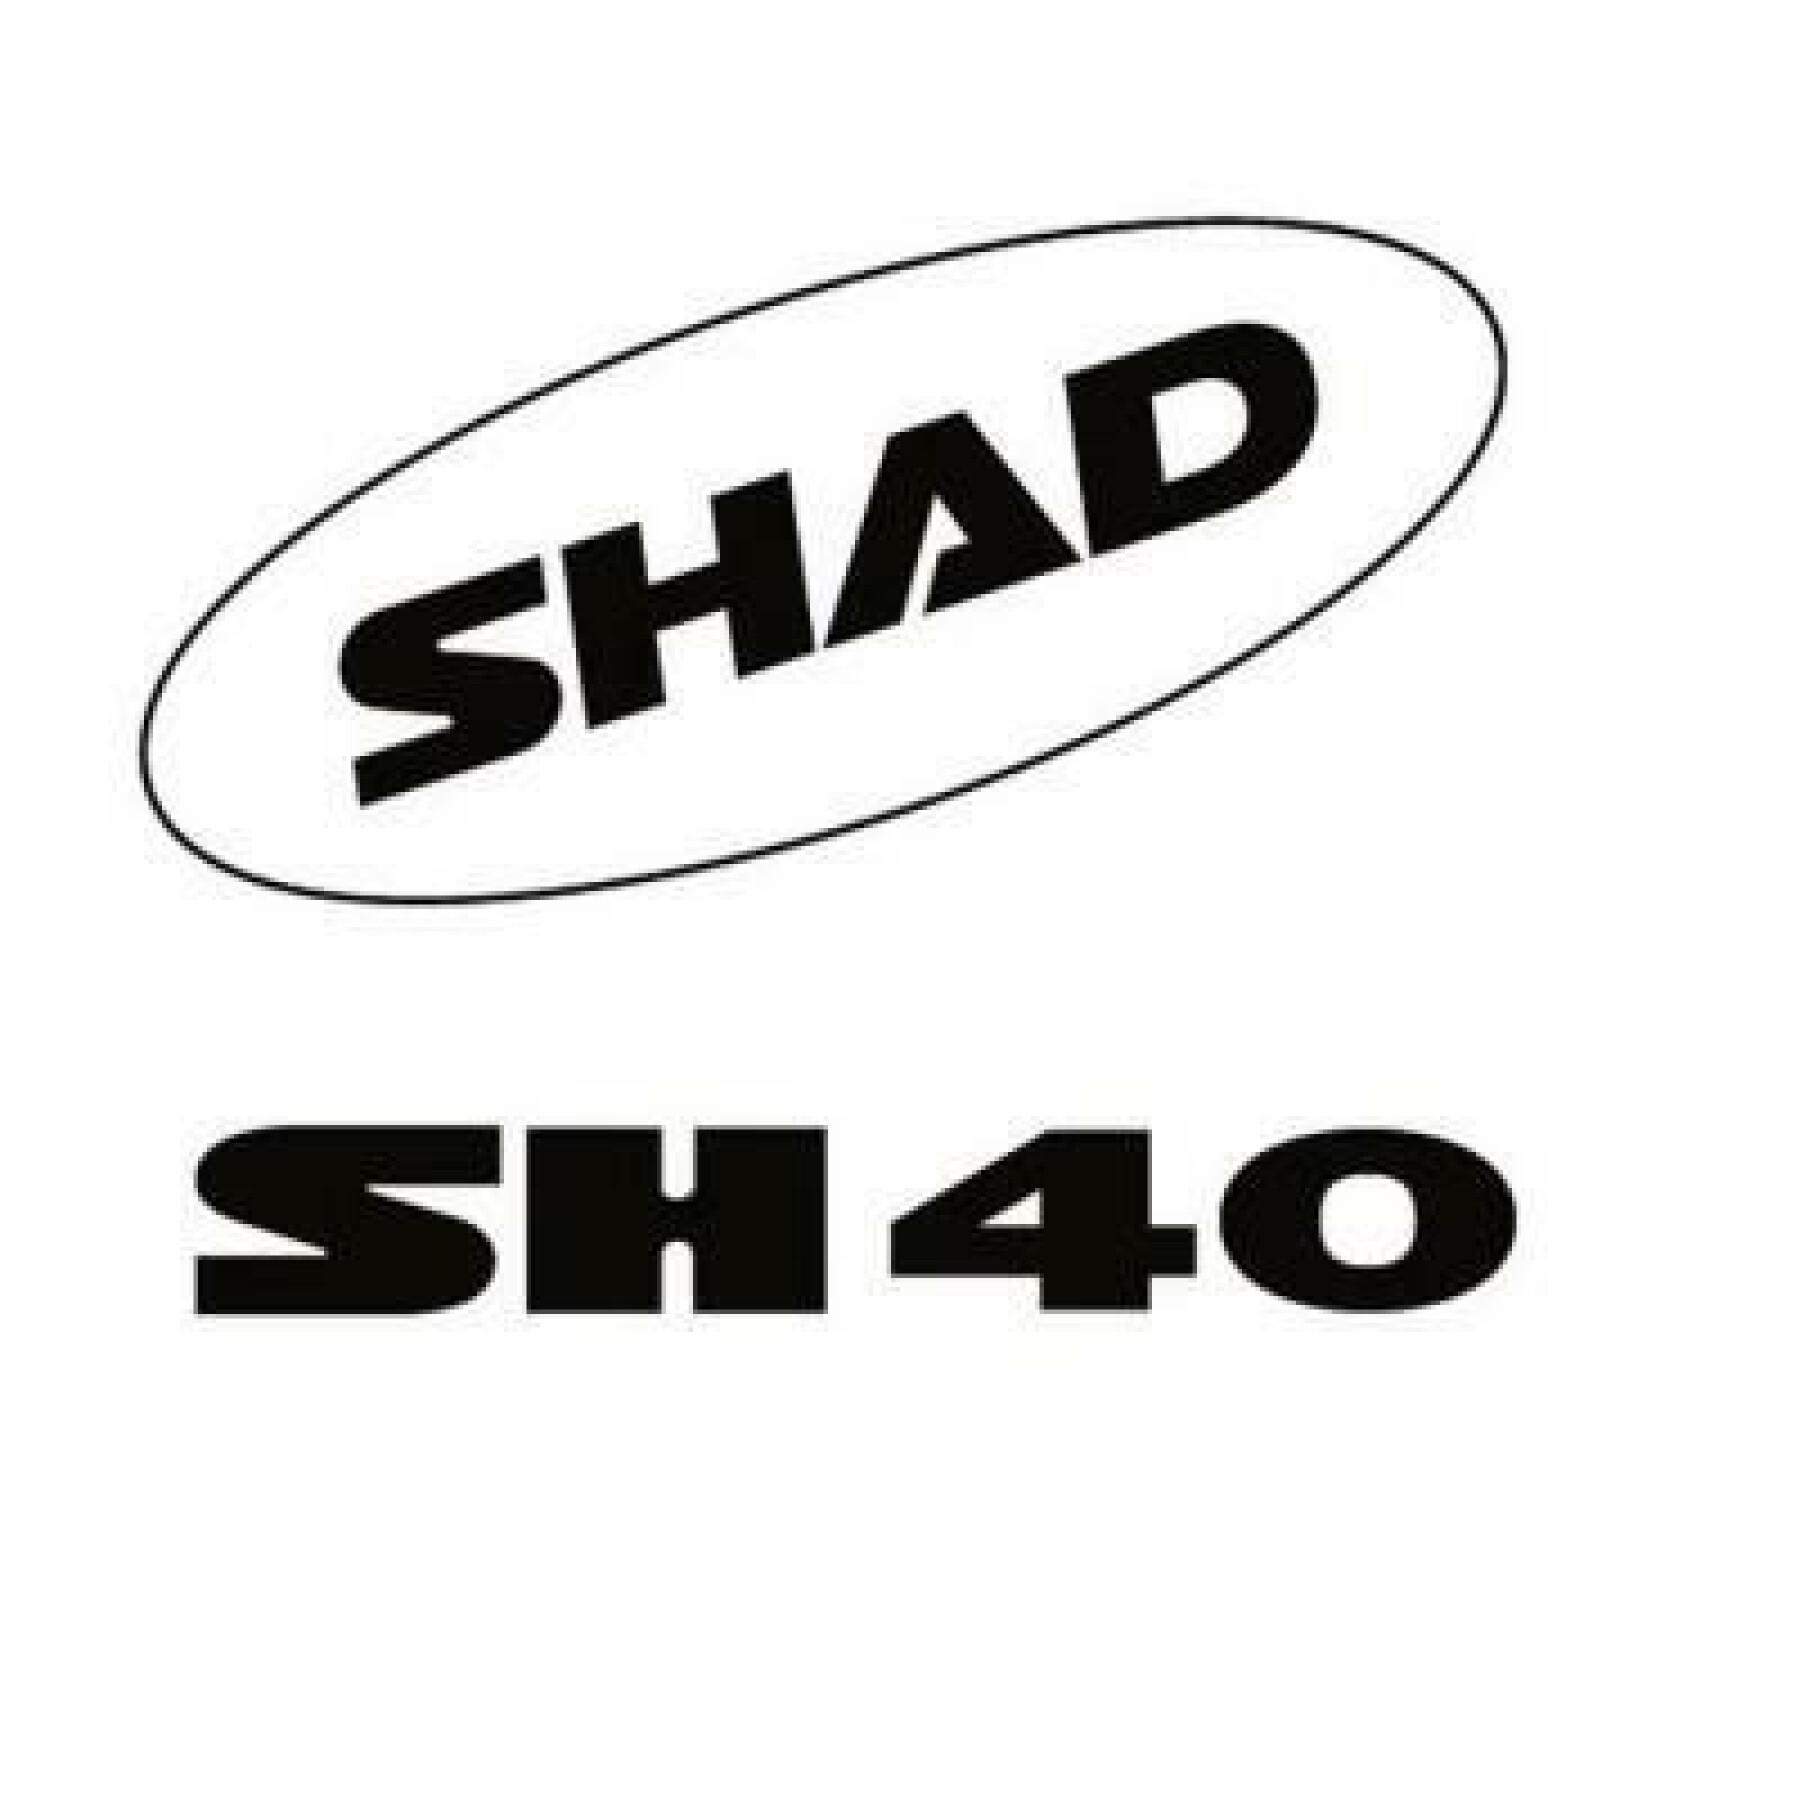 Autocollants Shad sh 40 2011